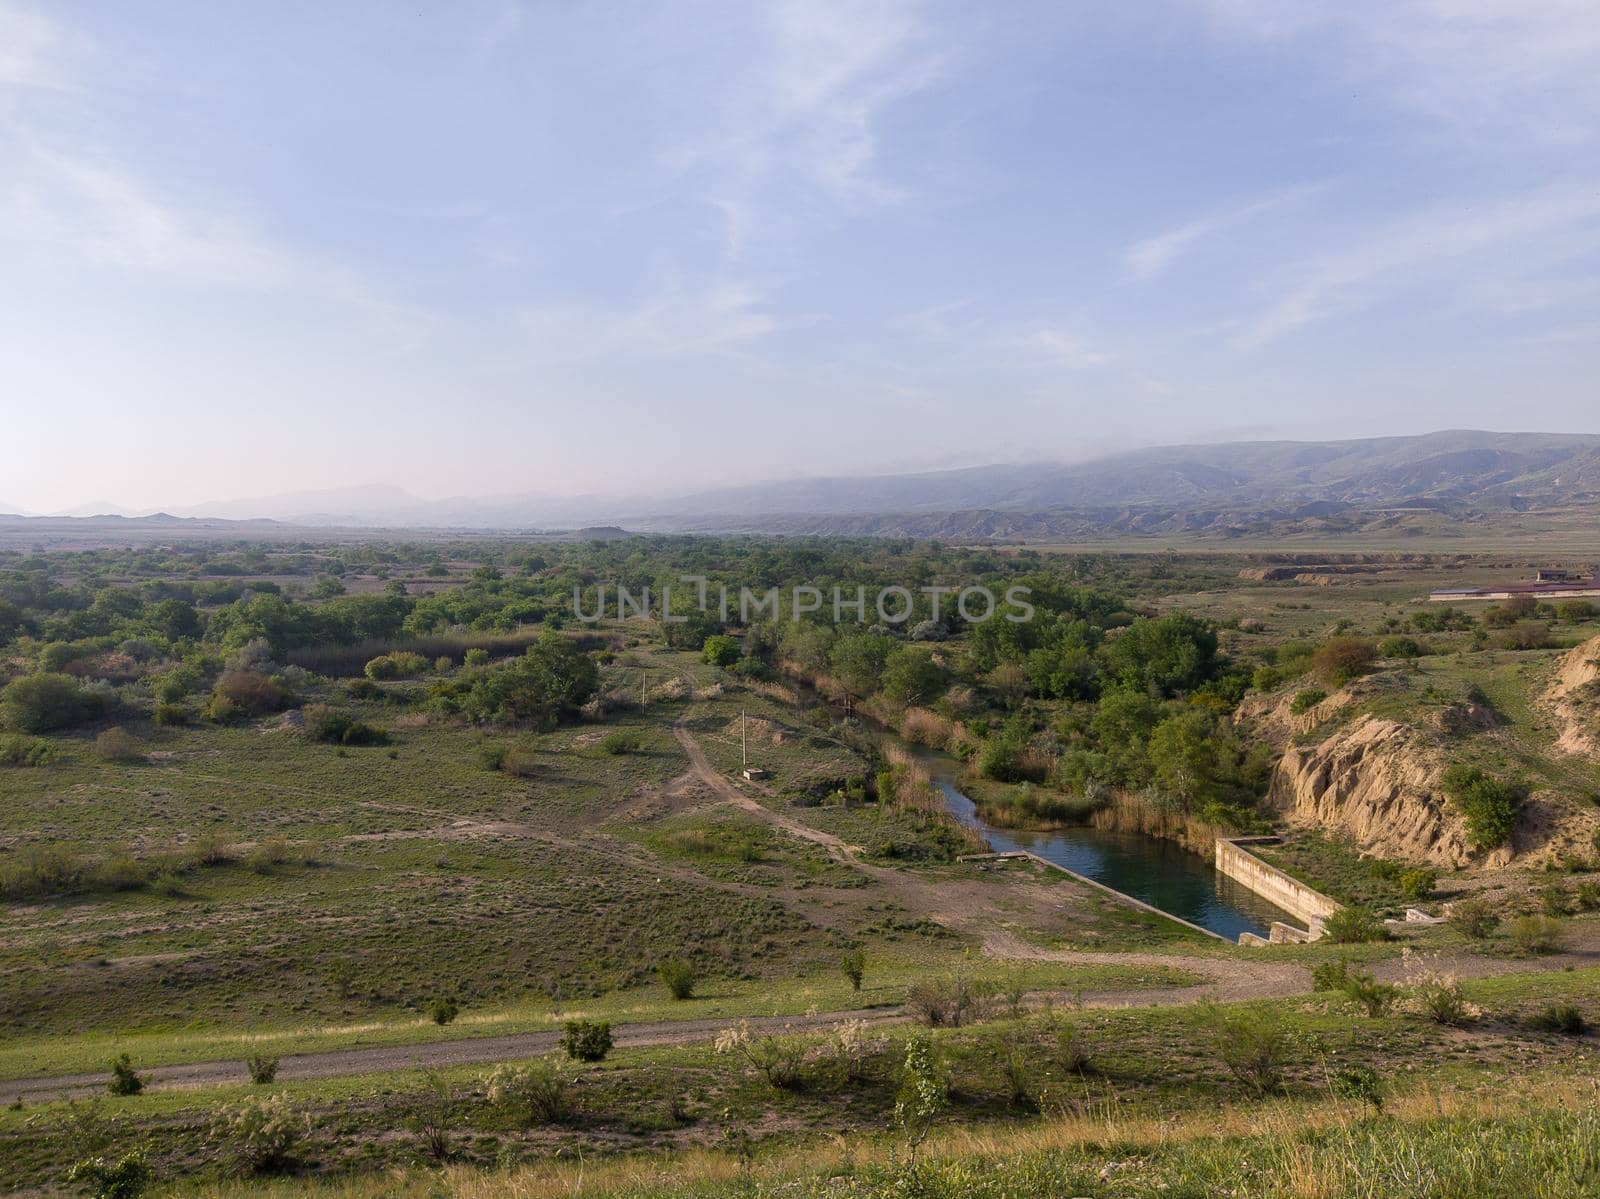 Kahetia, Georgia mountain and fields landscape view by javax